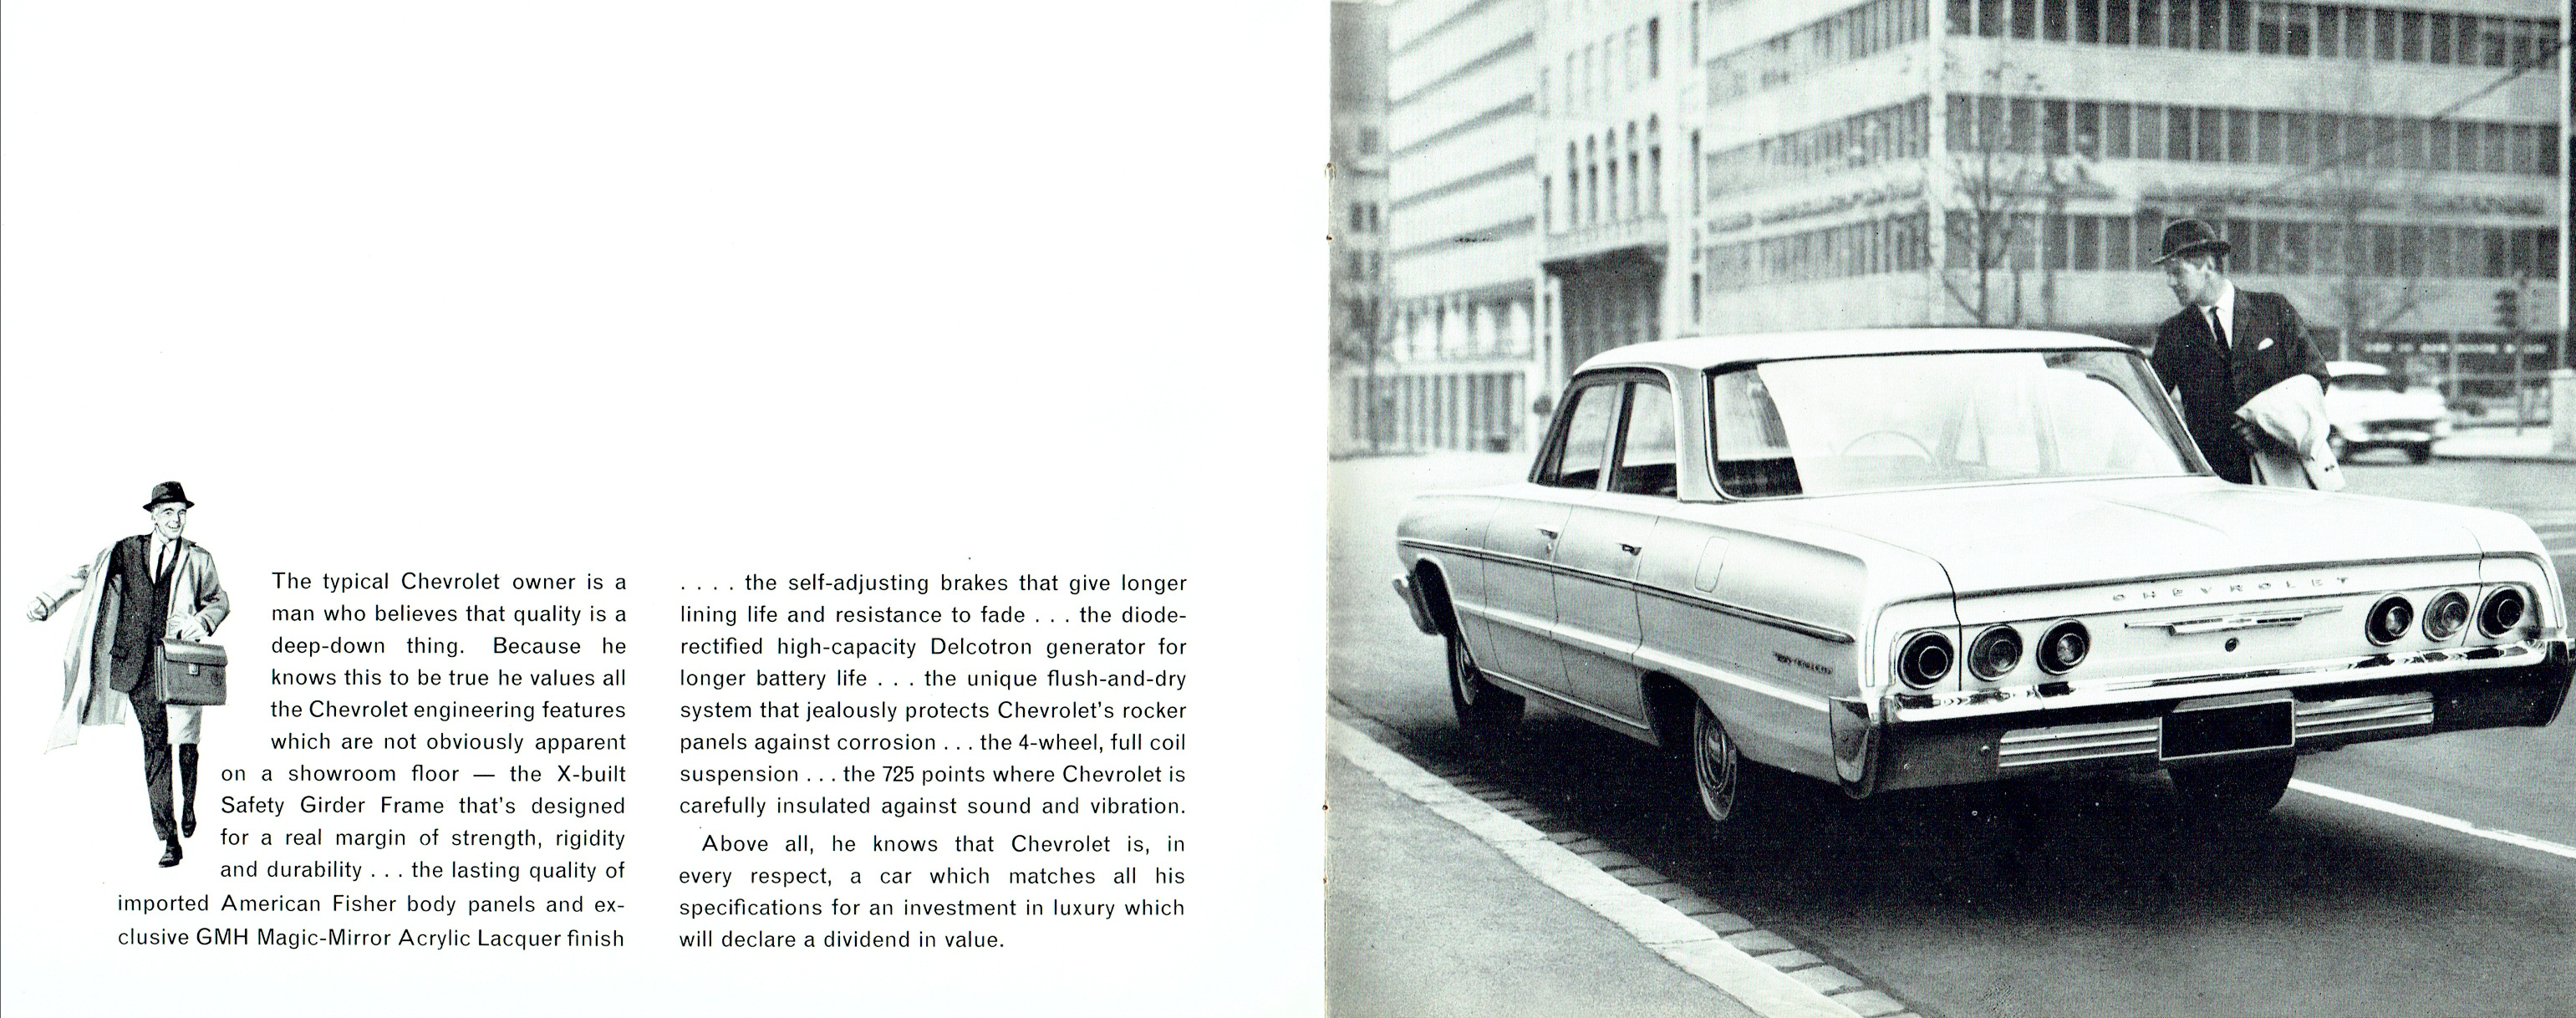 1964 Chevrolet B-W (Aus)-06-07